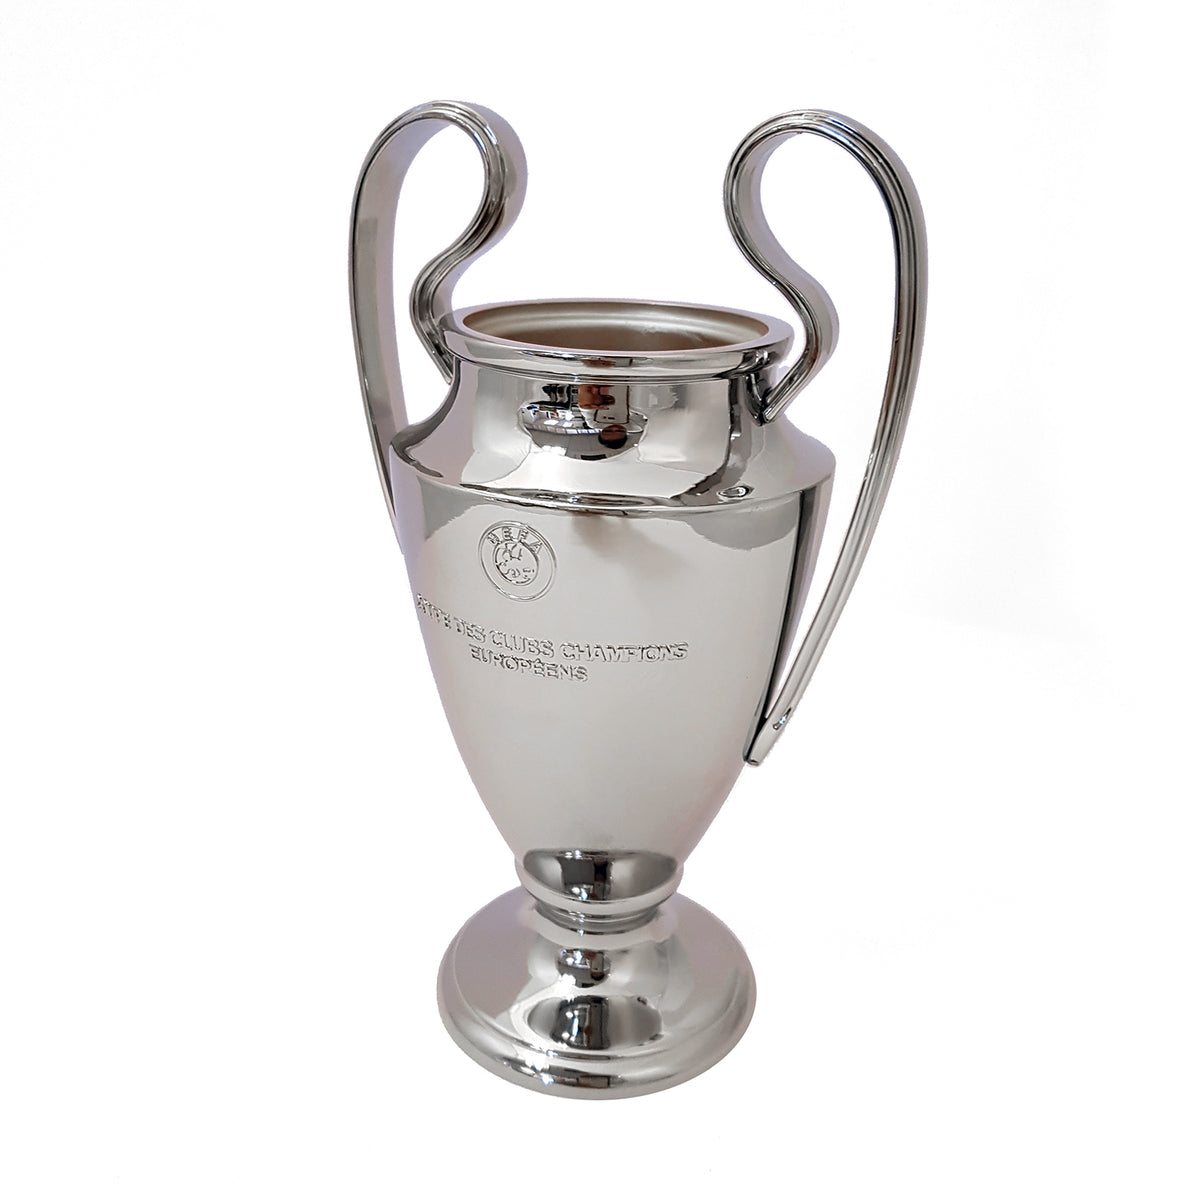 The UEFA Champions League trophy, UEFA Champions League